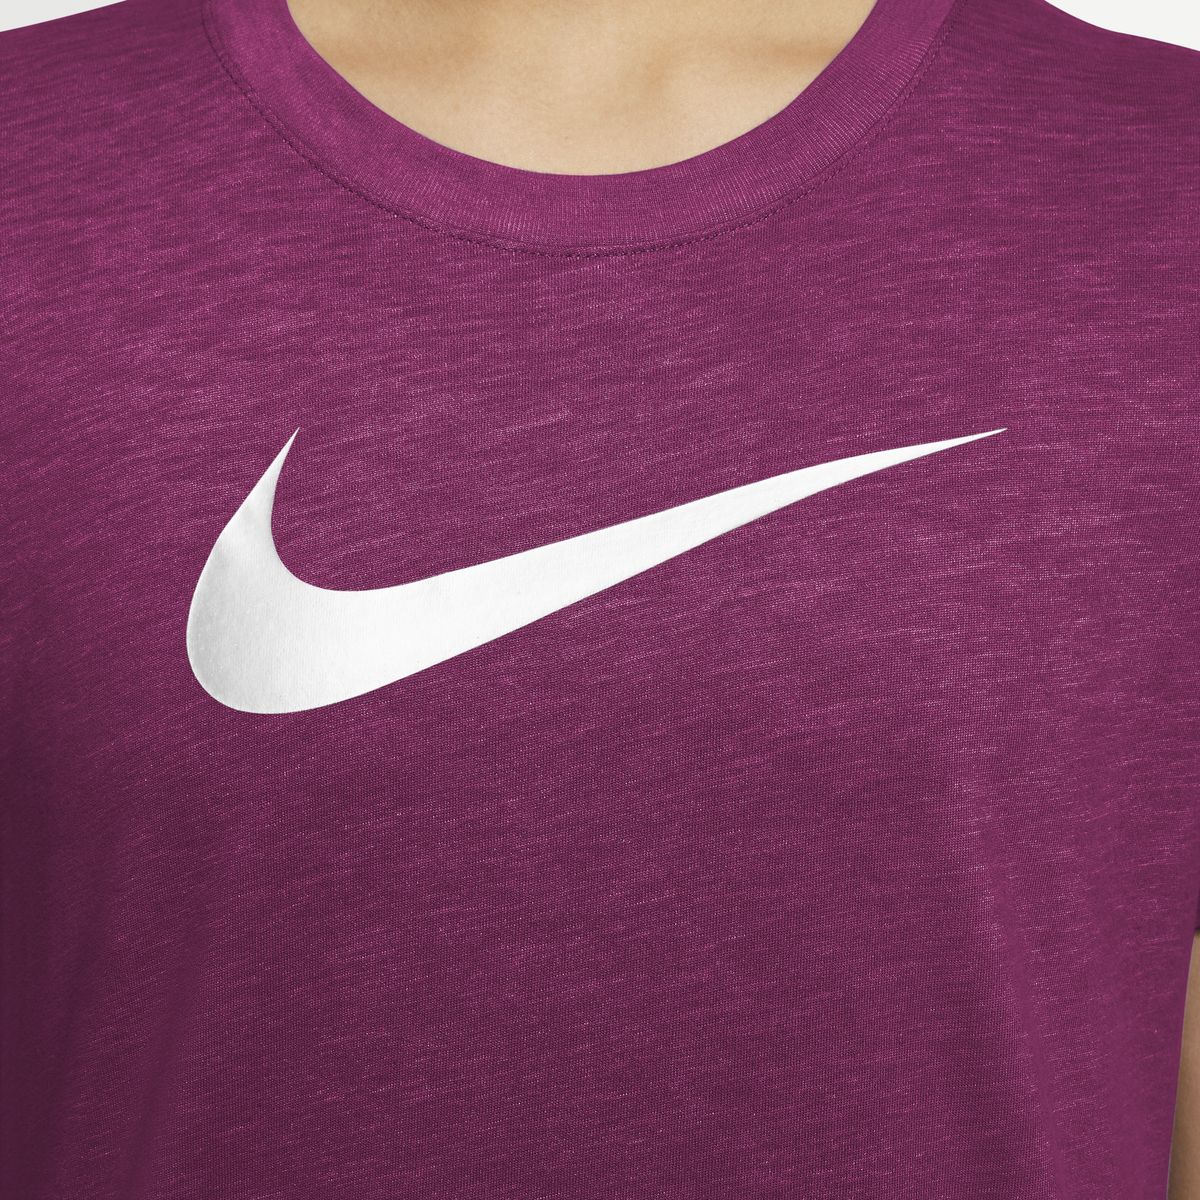 Nike Dri-FIT Training Damen T-Shirt